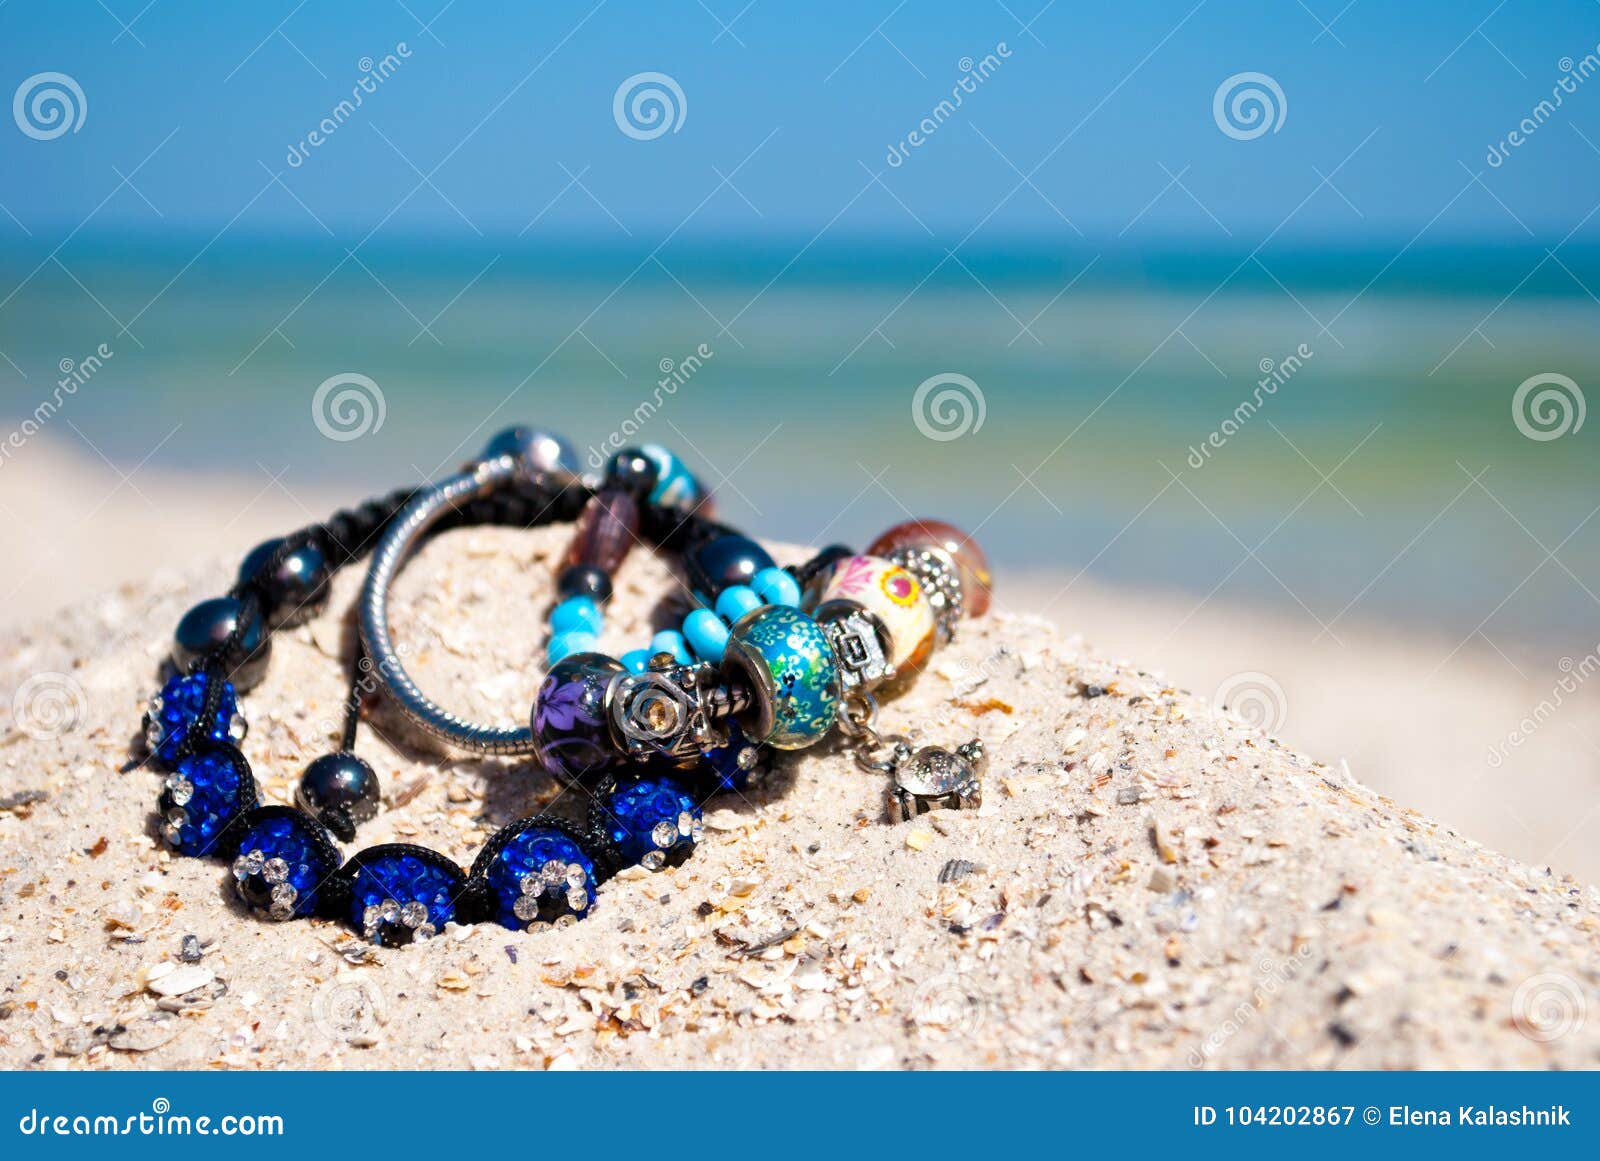 Waterproof Waxed Beach, Boho, Surfer Style Braided Bracelet, Yoga,  Friendship | eBay